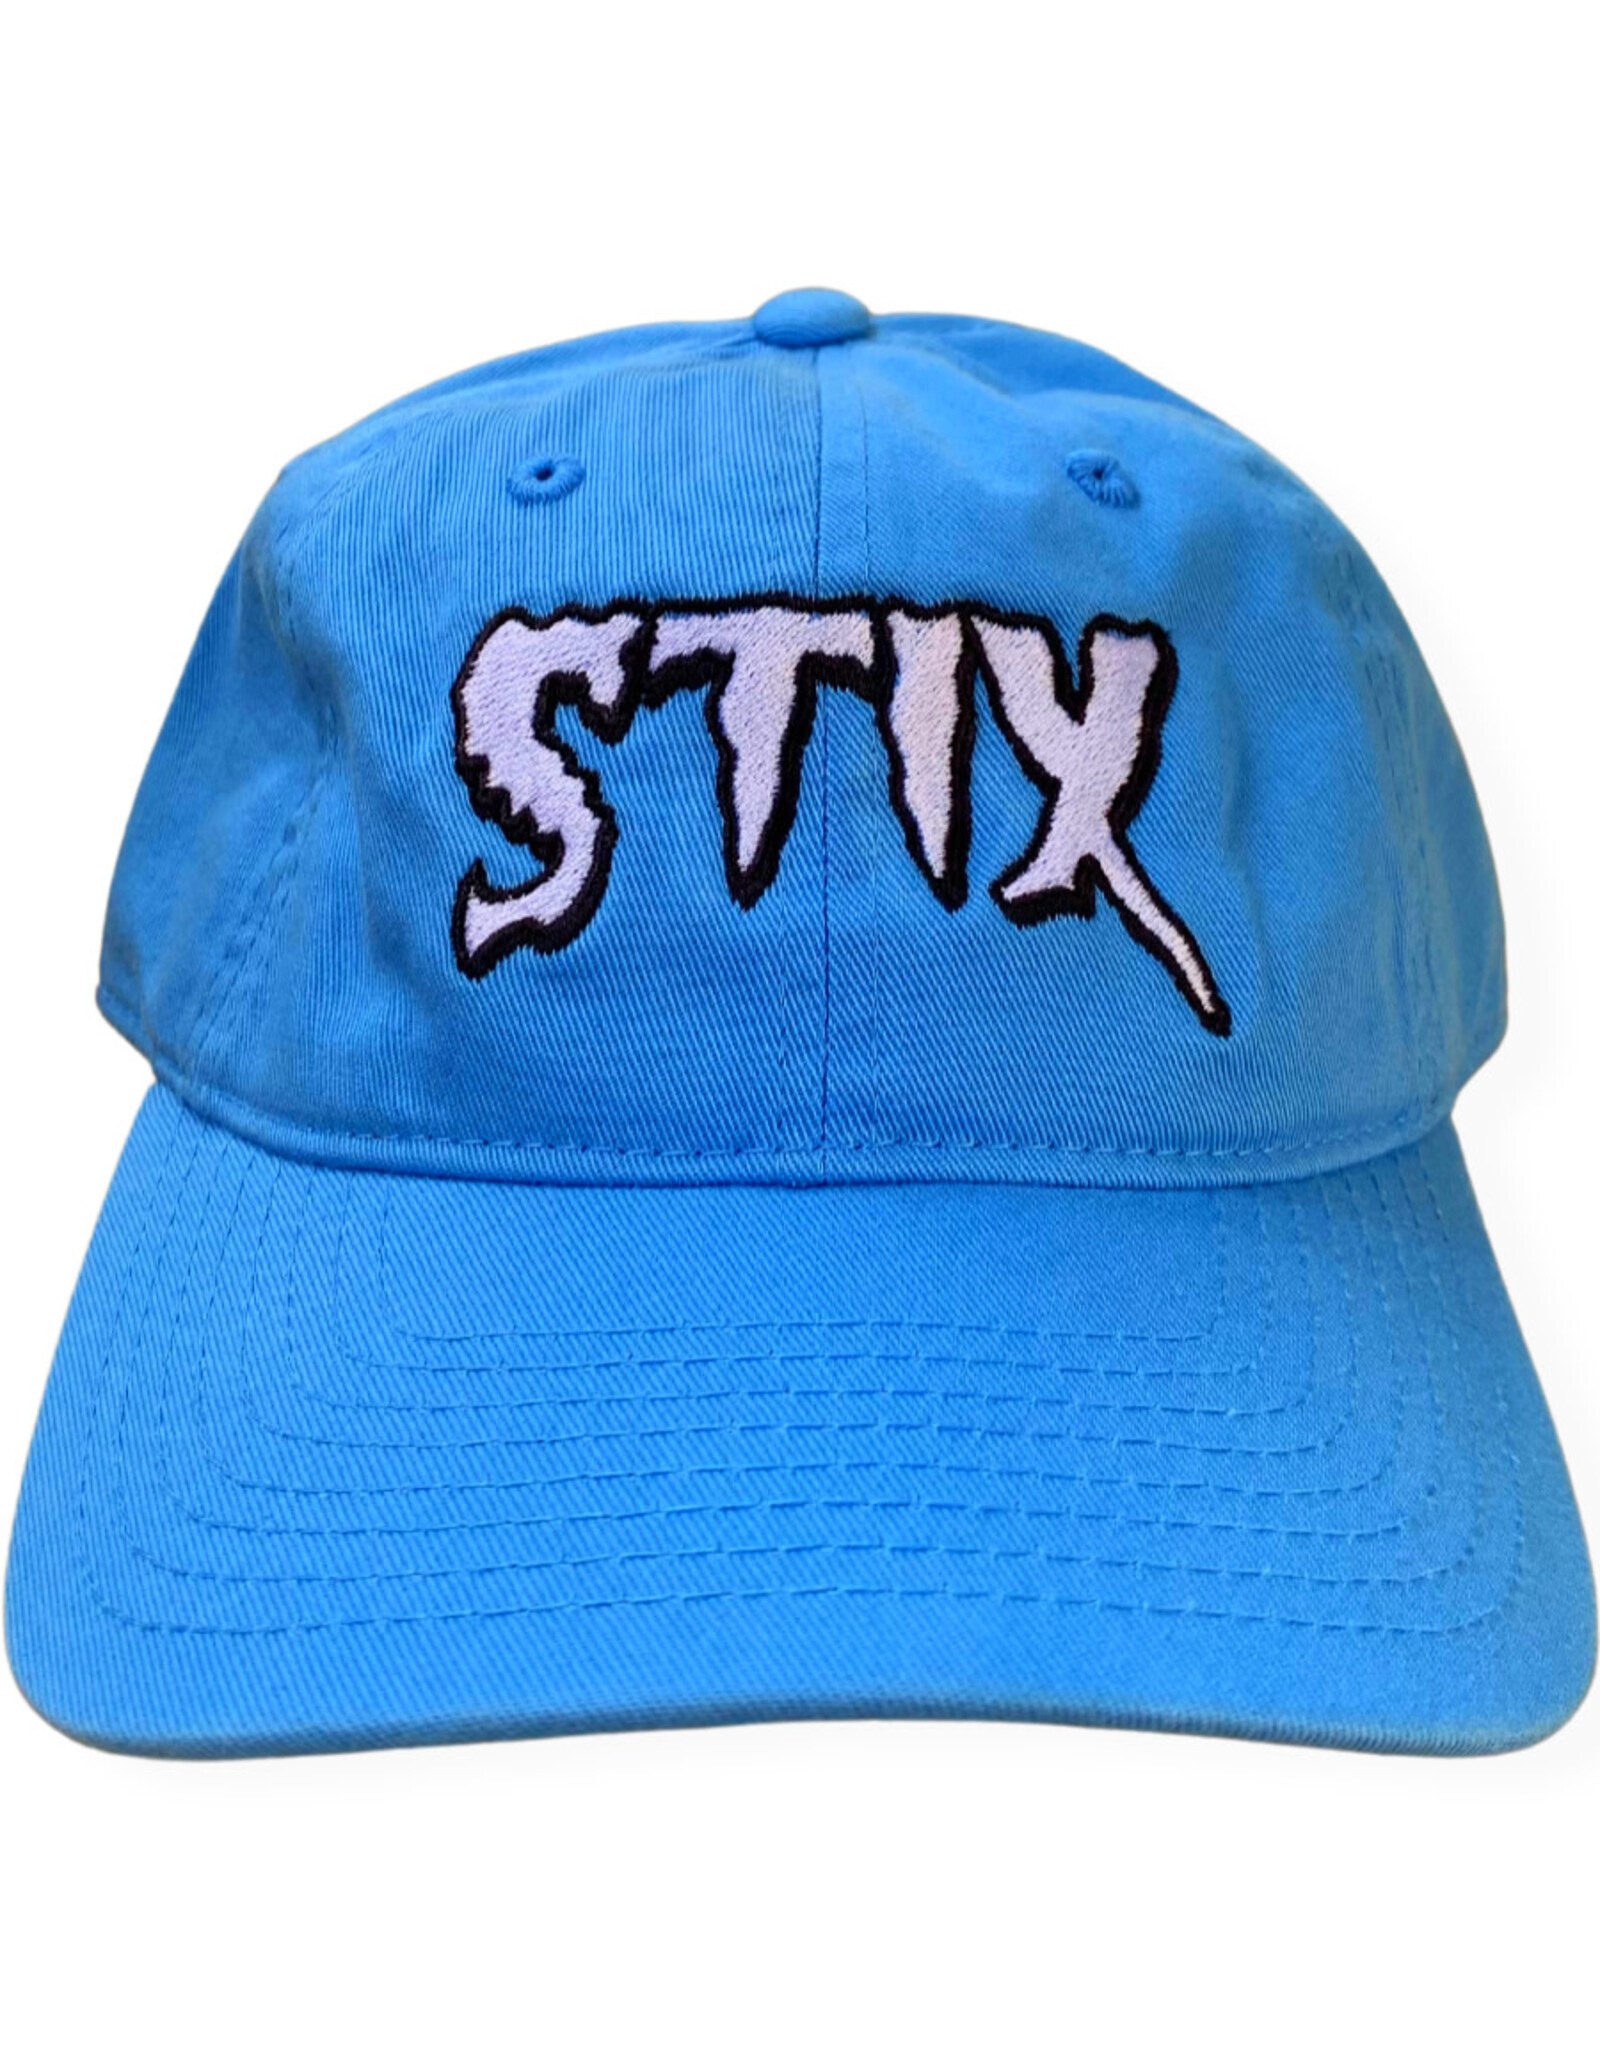 Stix SGV Stix Hat Bad People Strapback (Light Blue/White/Black)